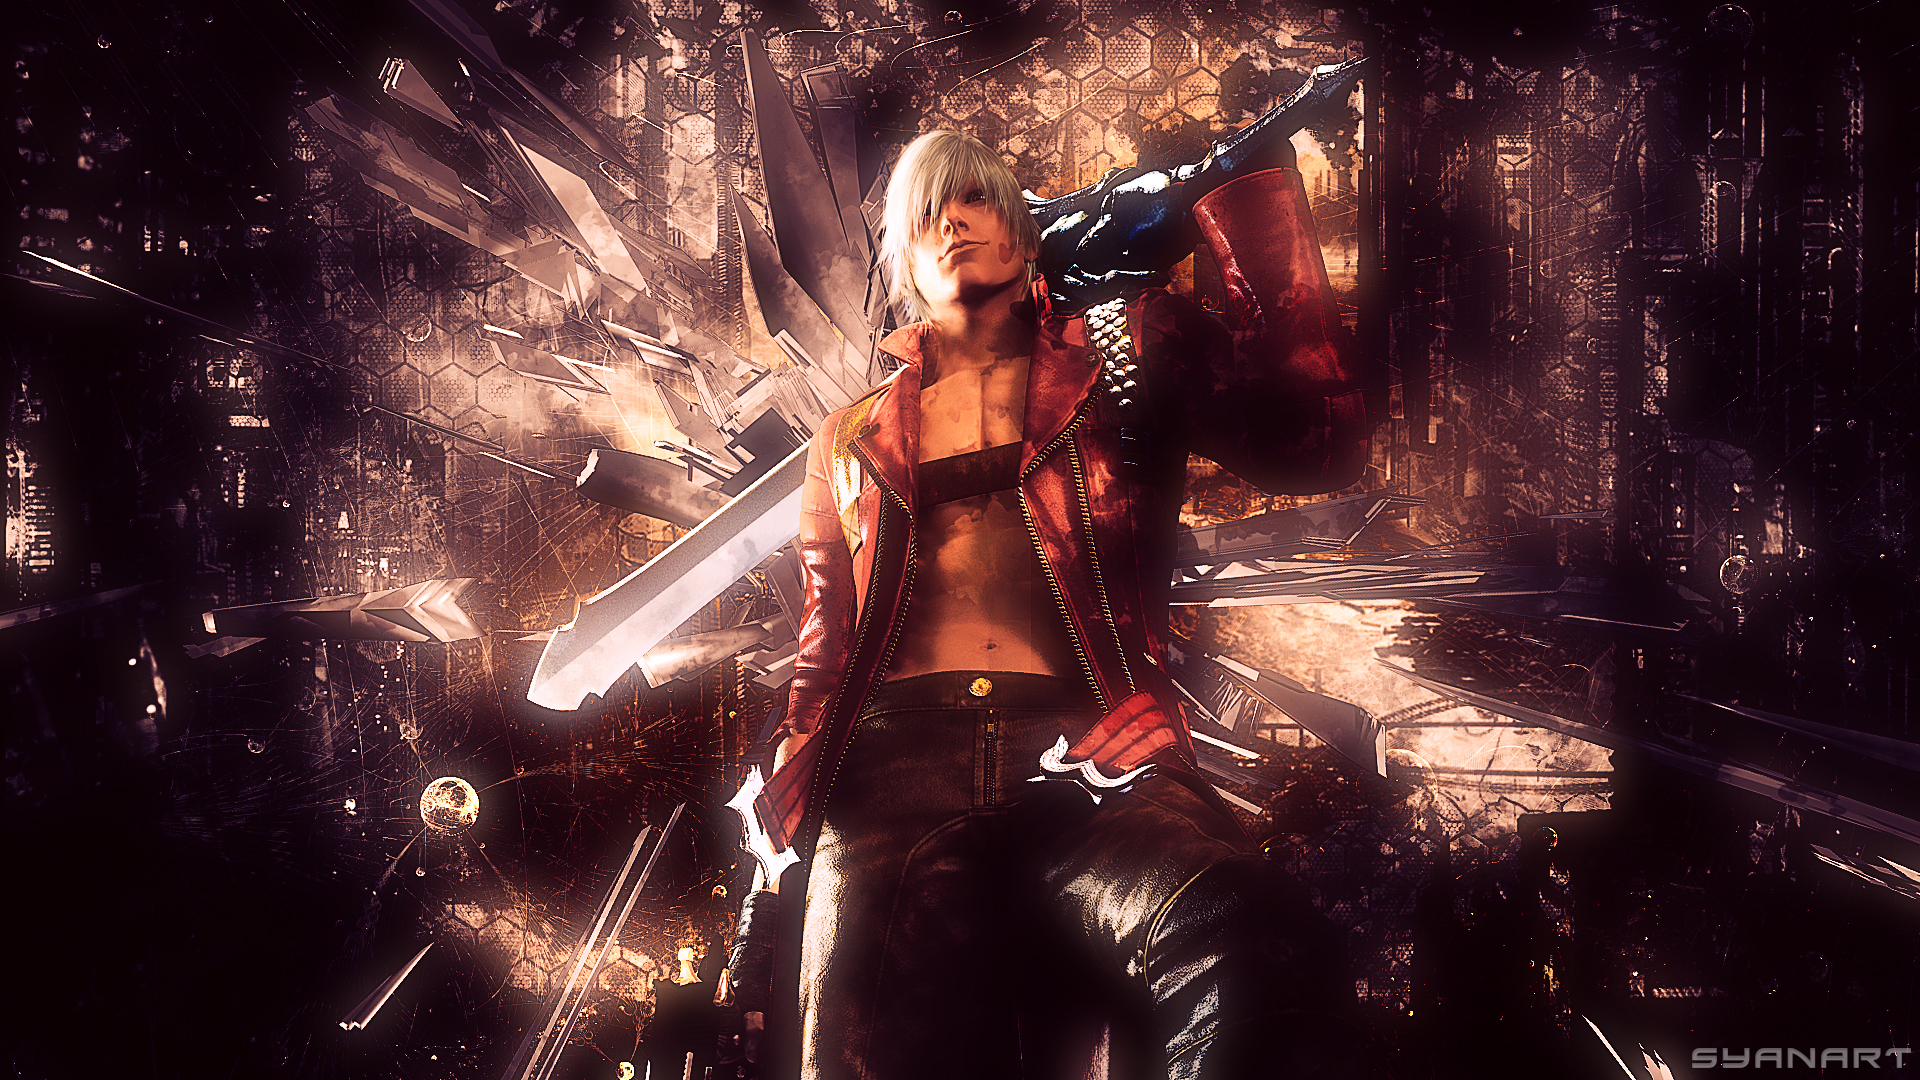 Video Game Devil May Cry 3: Dante's Awakening HD Wallpaper | Background Image